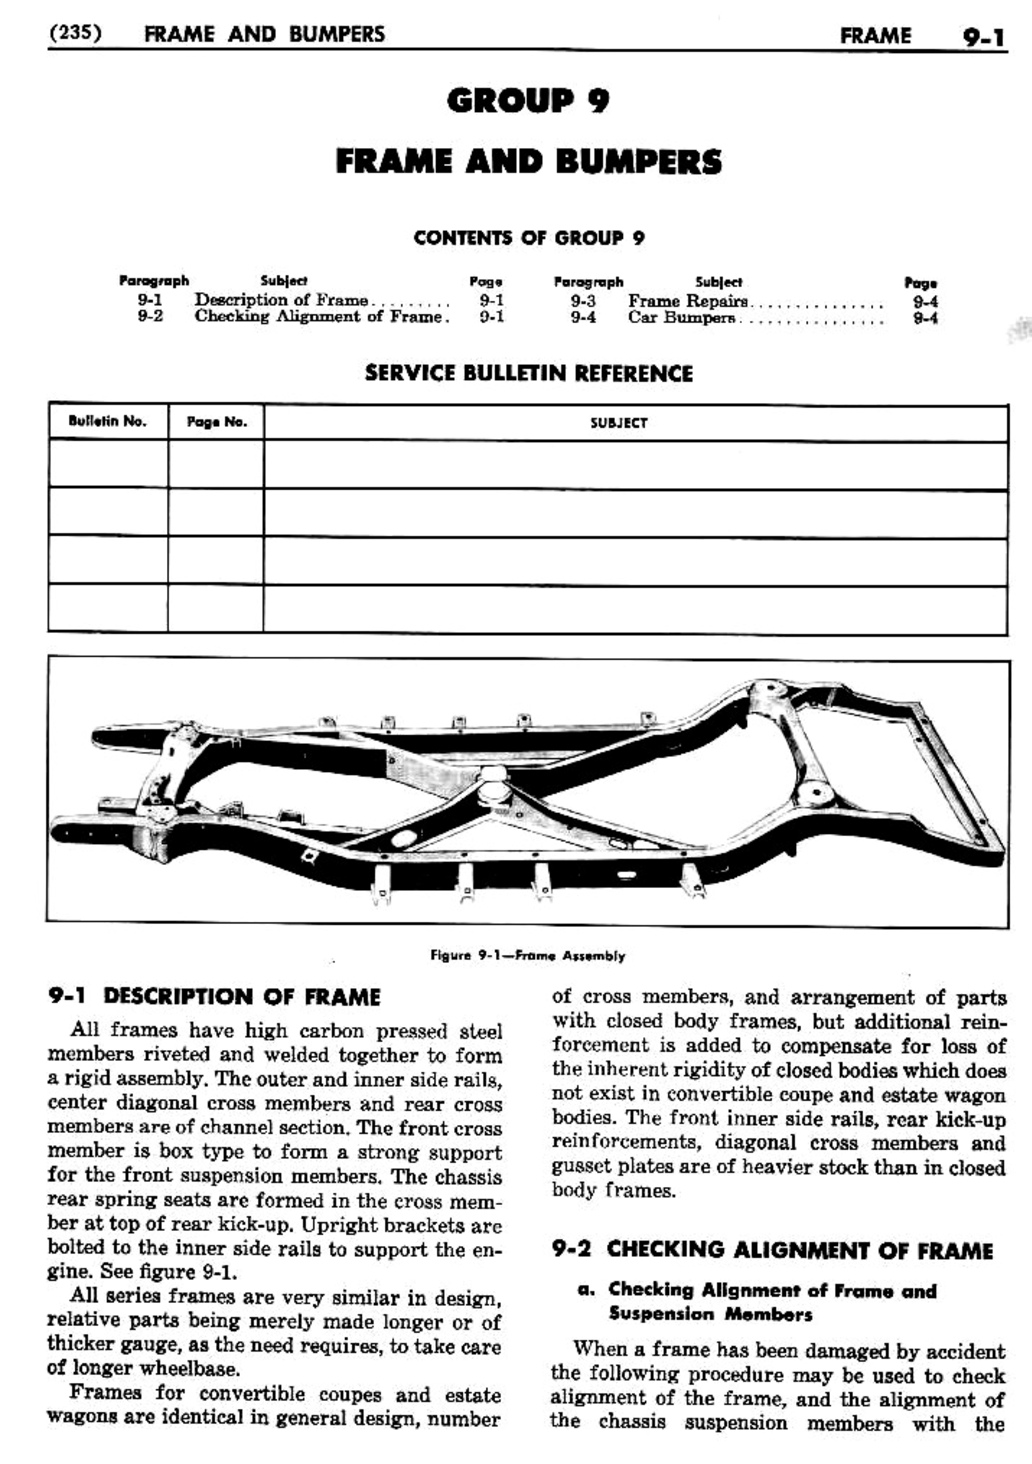 n_10 1950 Buick Shop Manual - Frame & Bumpers-001-001.jpg